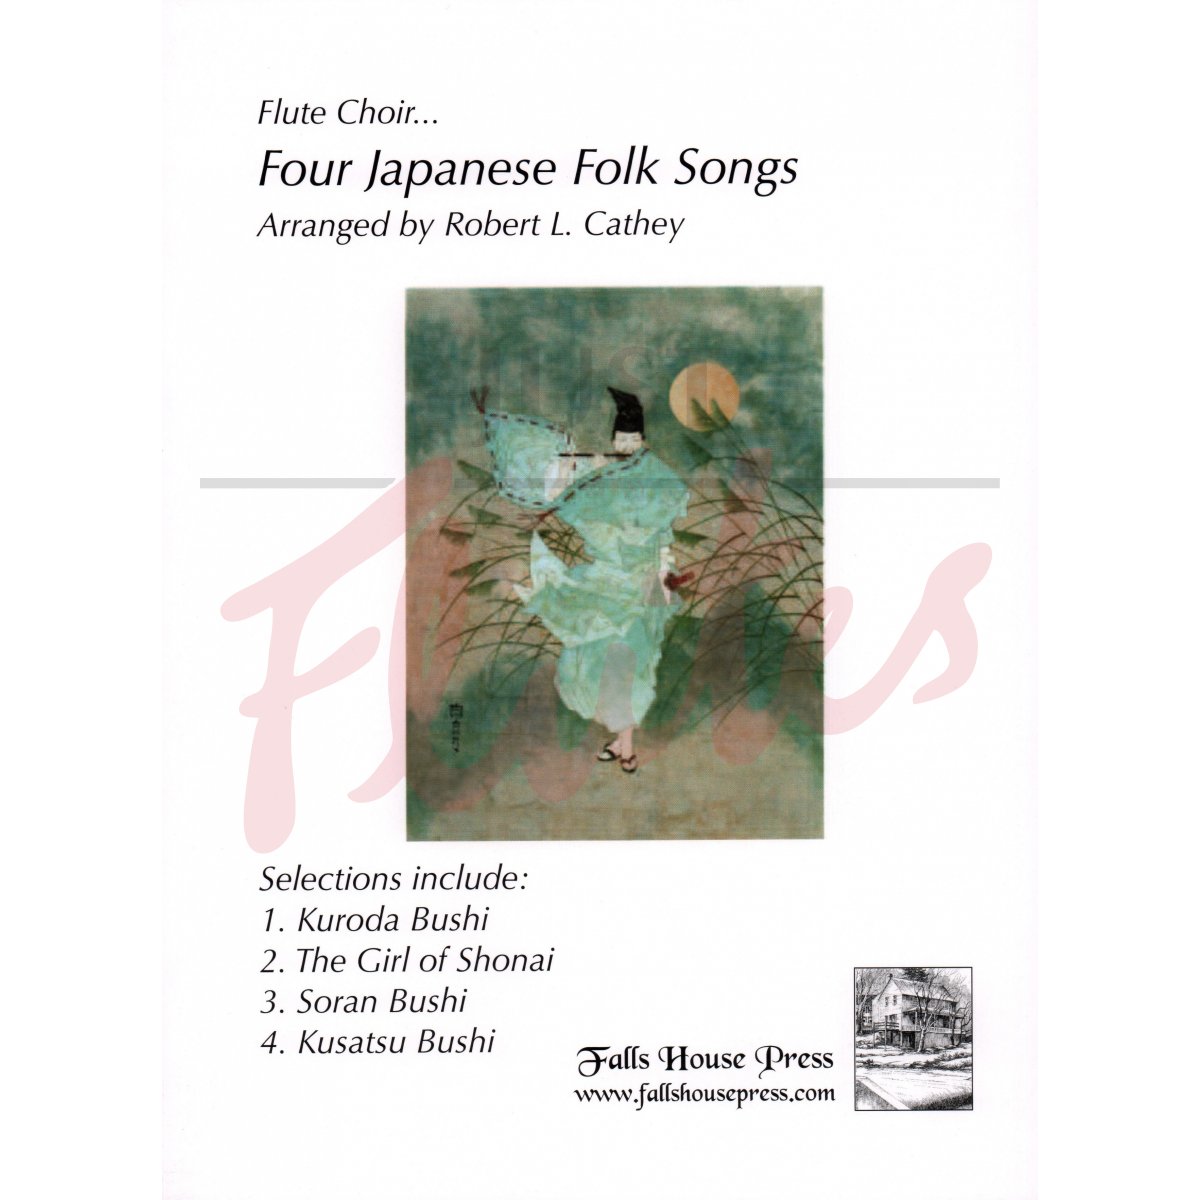 Four Japanese Folk Songs for Flute Choir